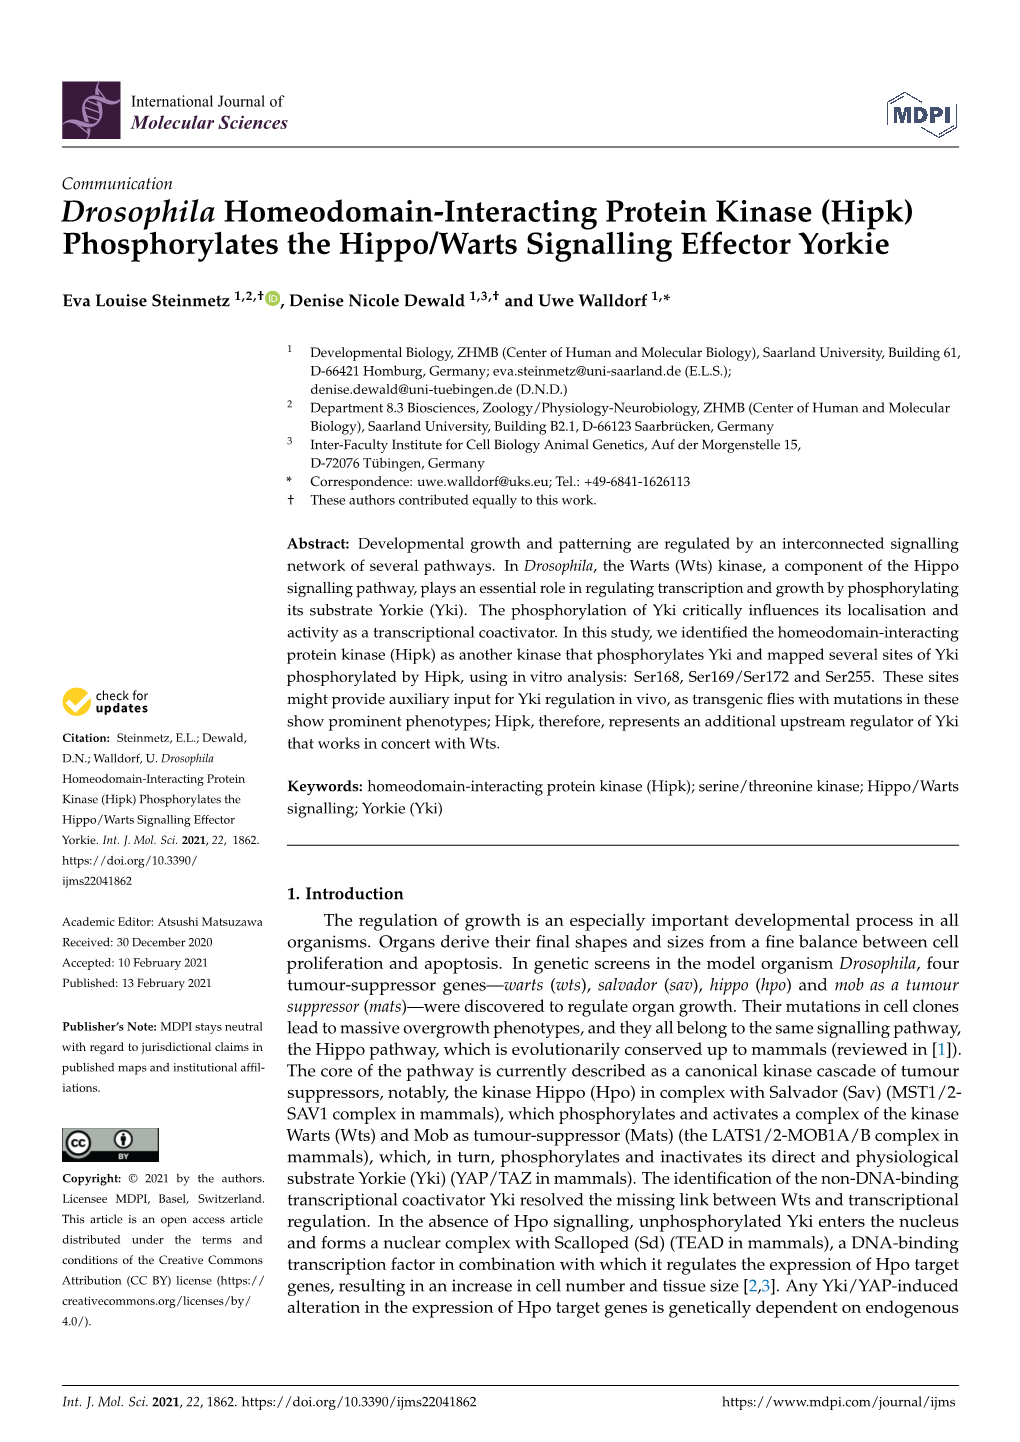 Drosophila Homeodomain-Interacting Protein Kinase (Hipk) Phosphorylates the Hippo/Warts Signalling Effector Yorkie